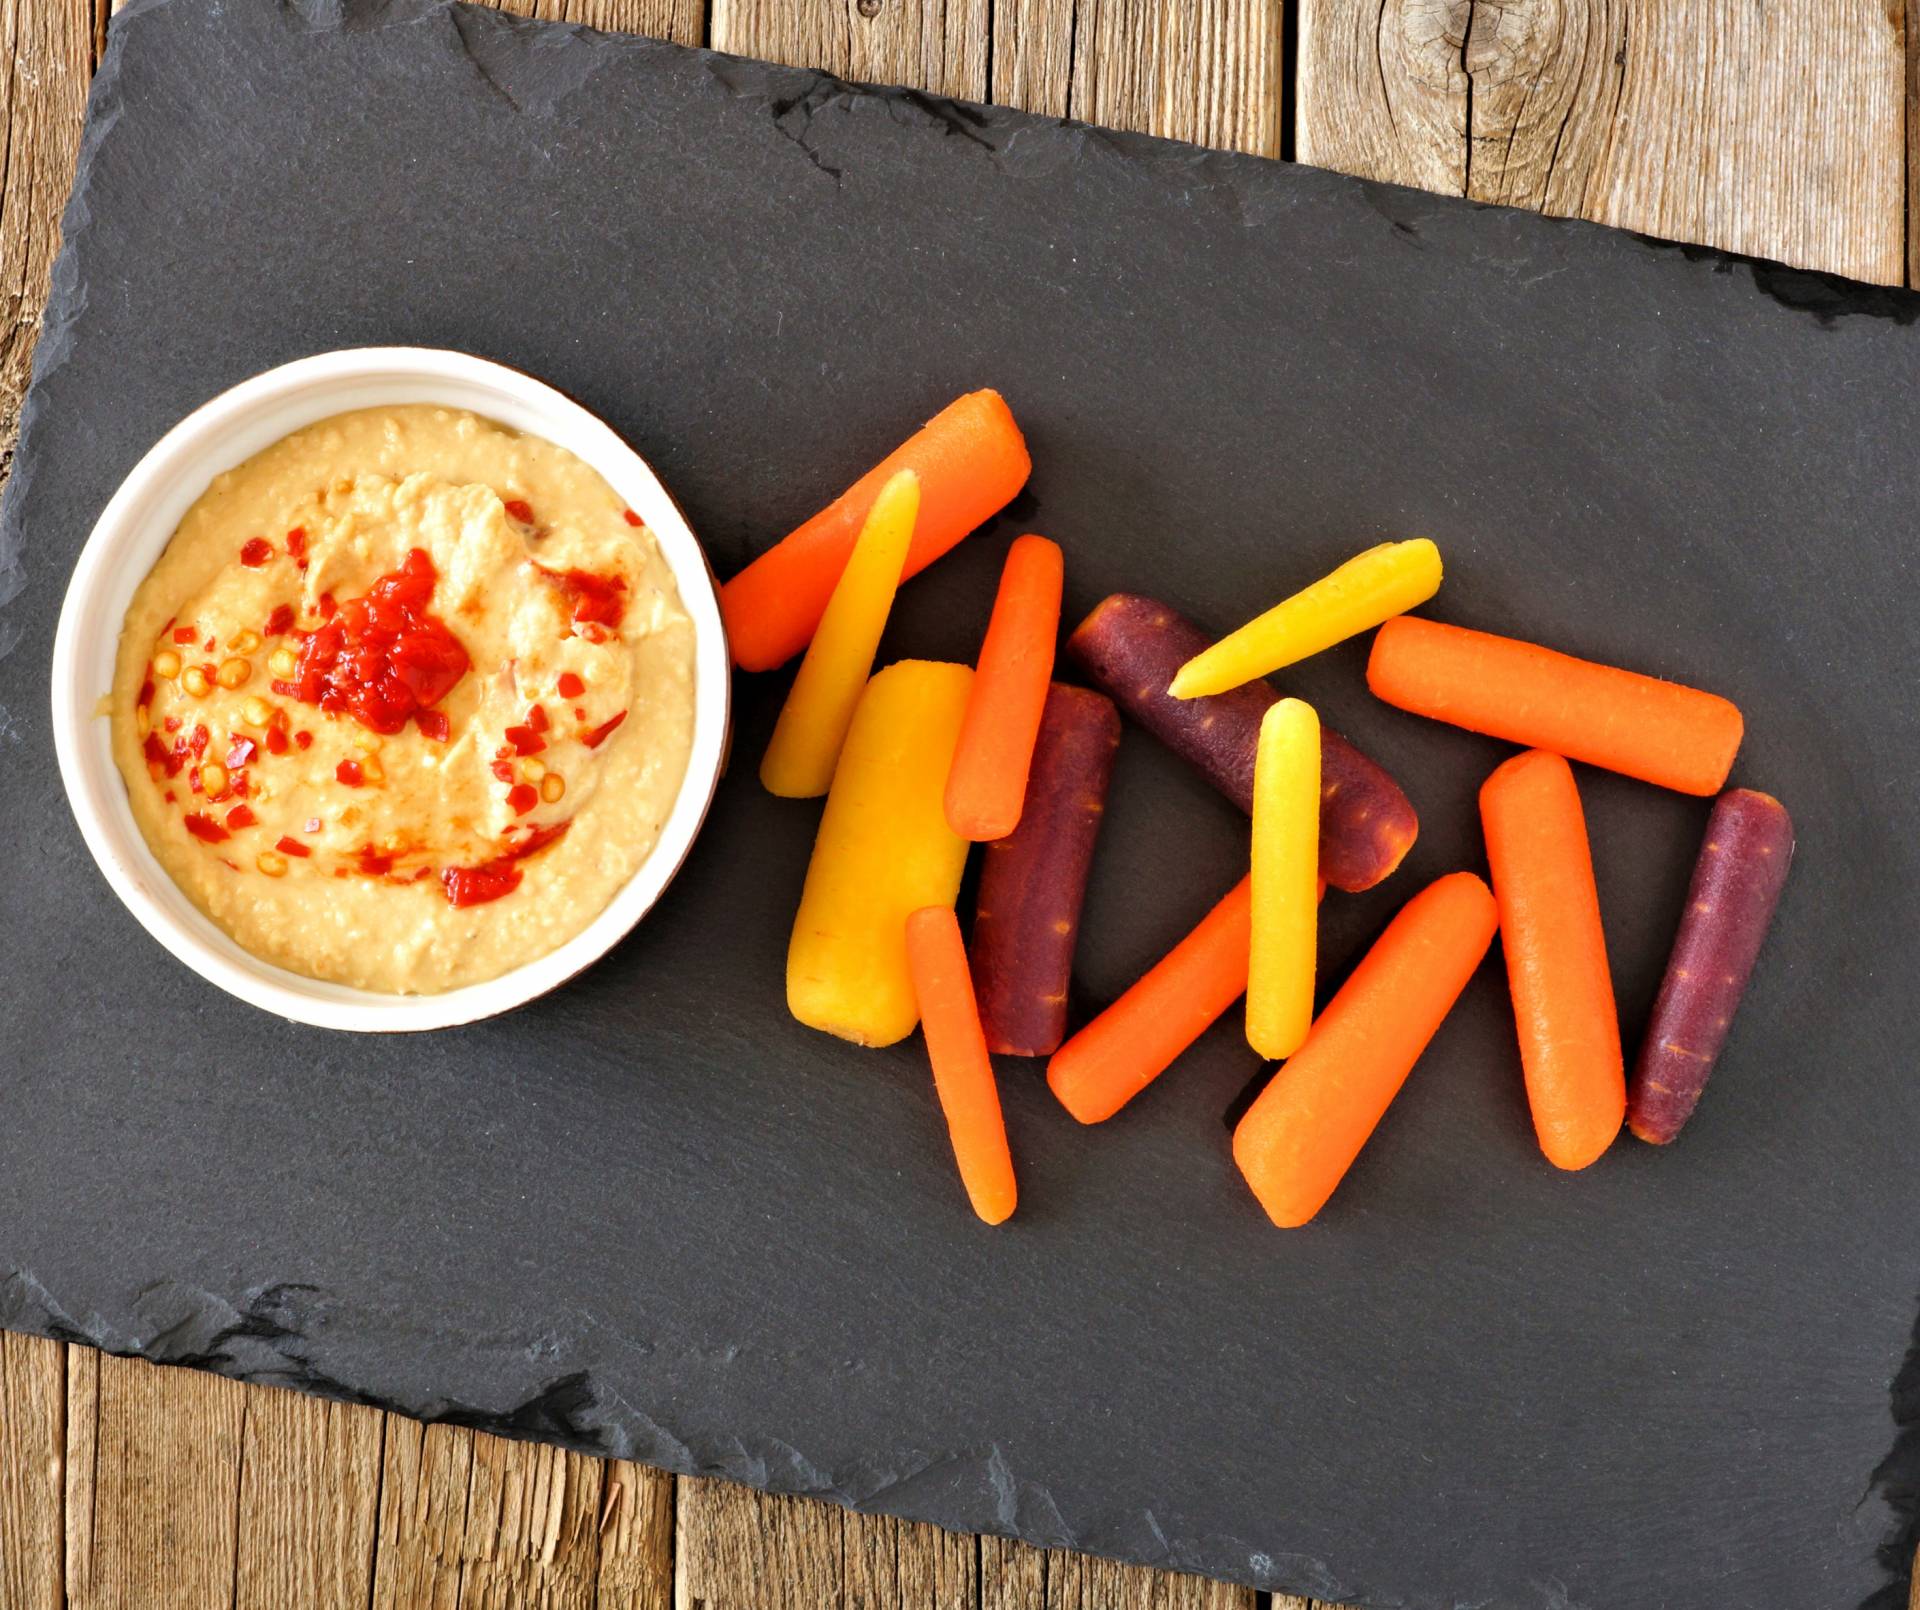 Hummus (8oz) & baby carrots